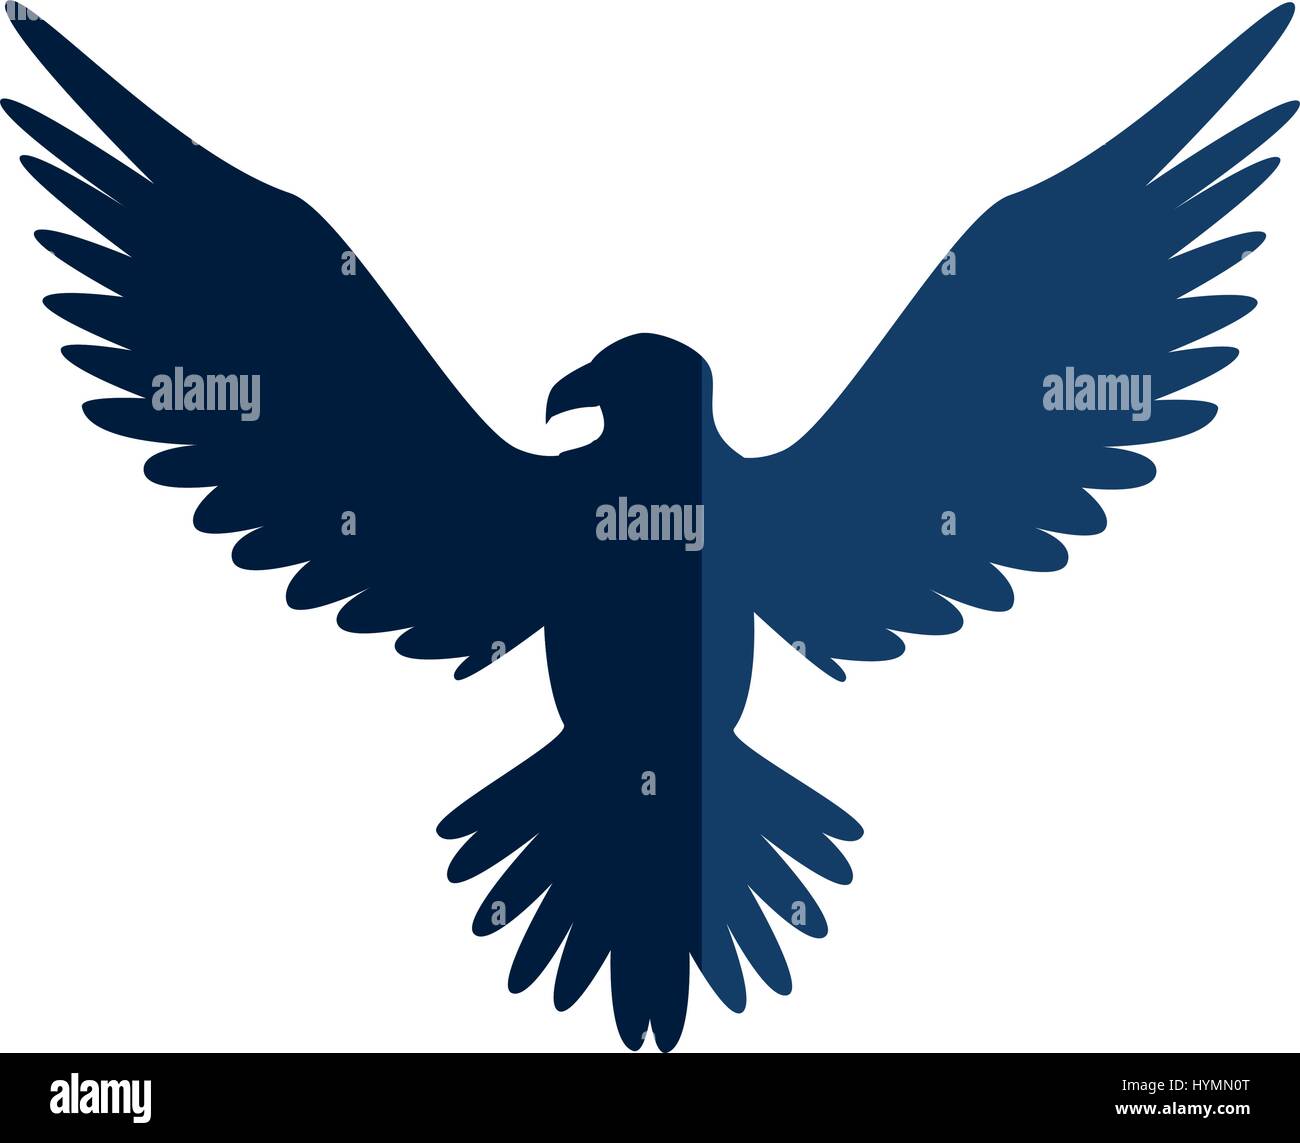 Eagle american symbol illustration Stock Vector Images - Alamy